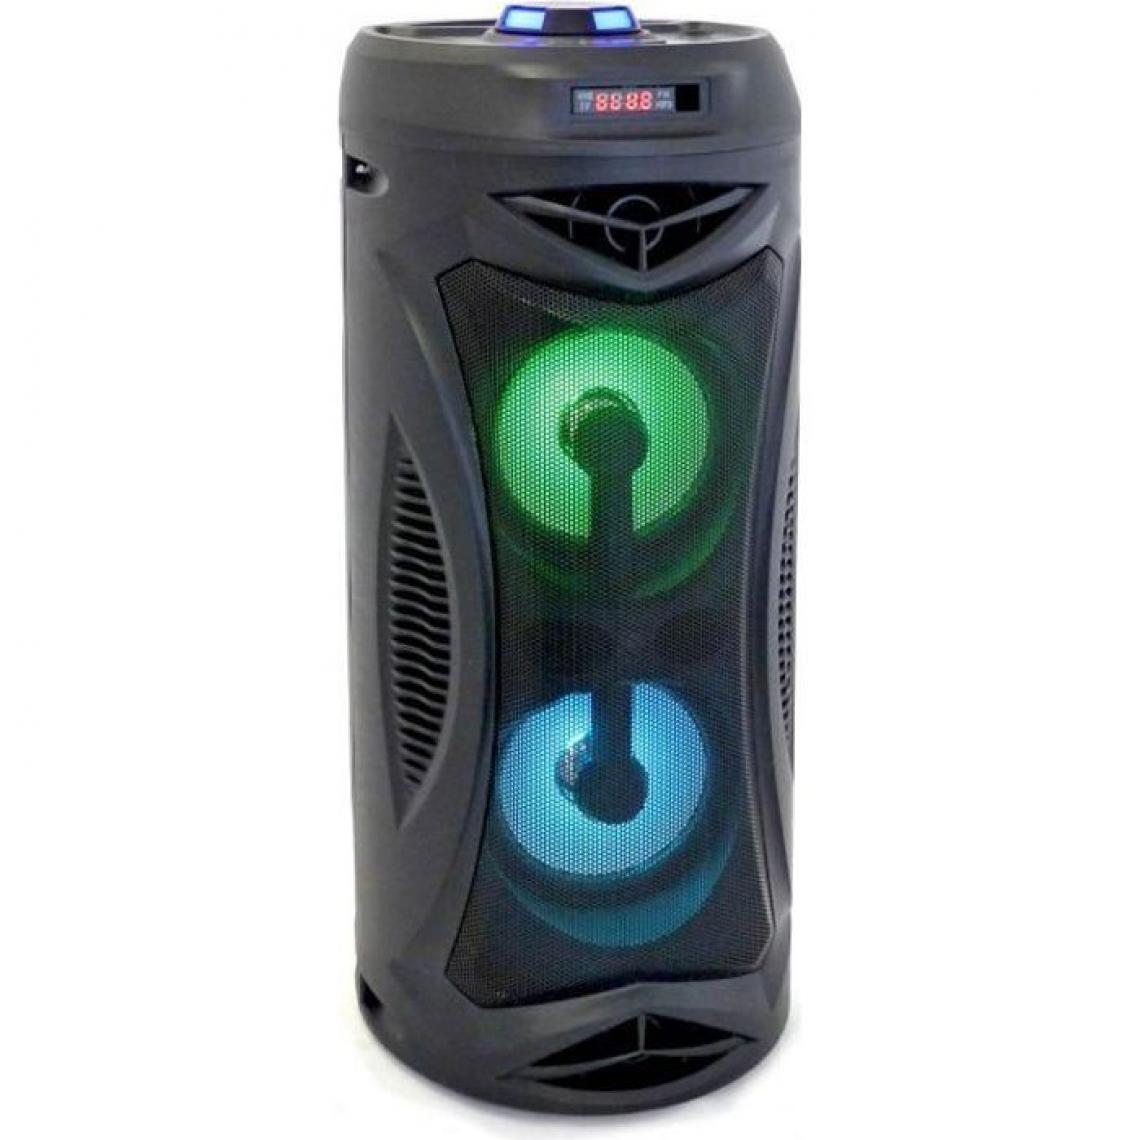 Inovalley - INOVALLEY KA02- Enceinte lumineuse Bluetooth 400W - Fonction Karaoke - 2 Haut-parleurs - Lumieres LED synchronisees - Port USB - Enceintes Hifi